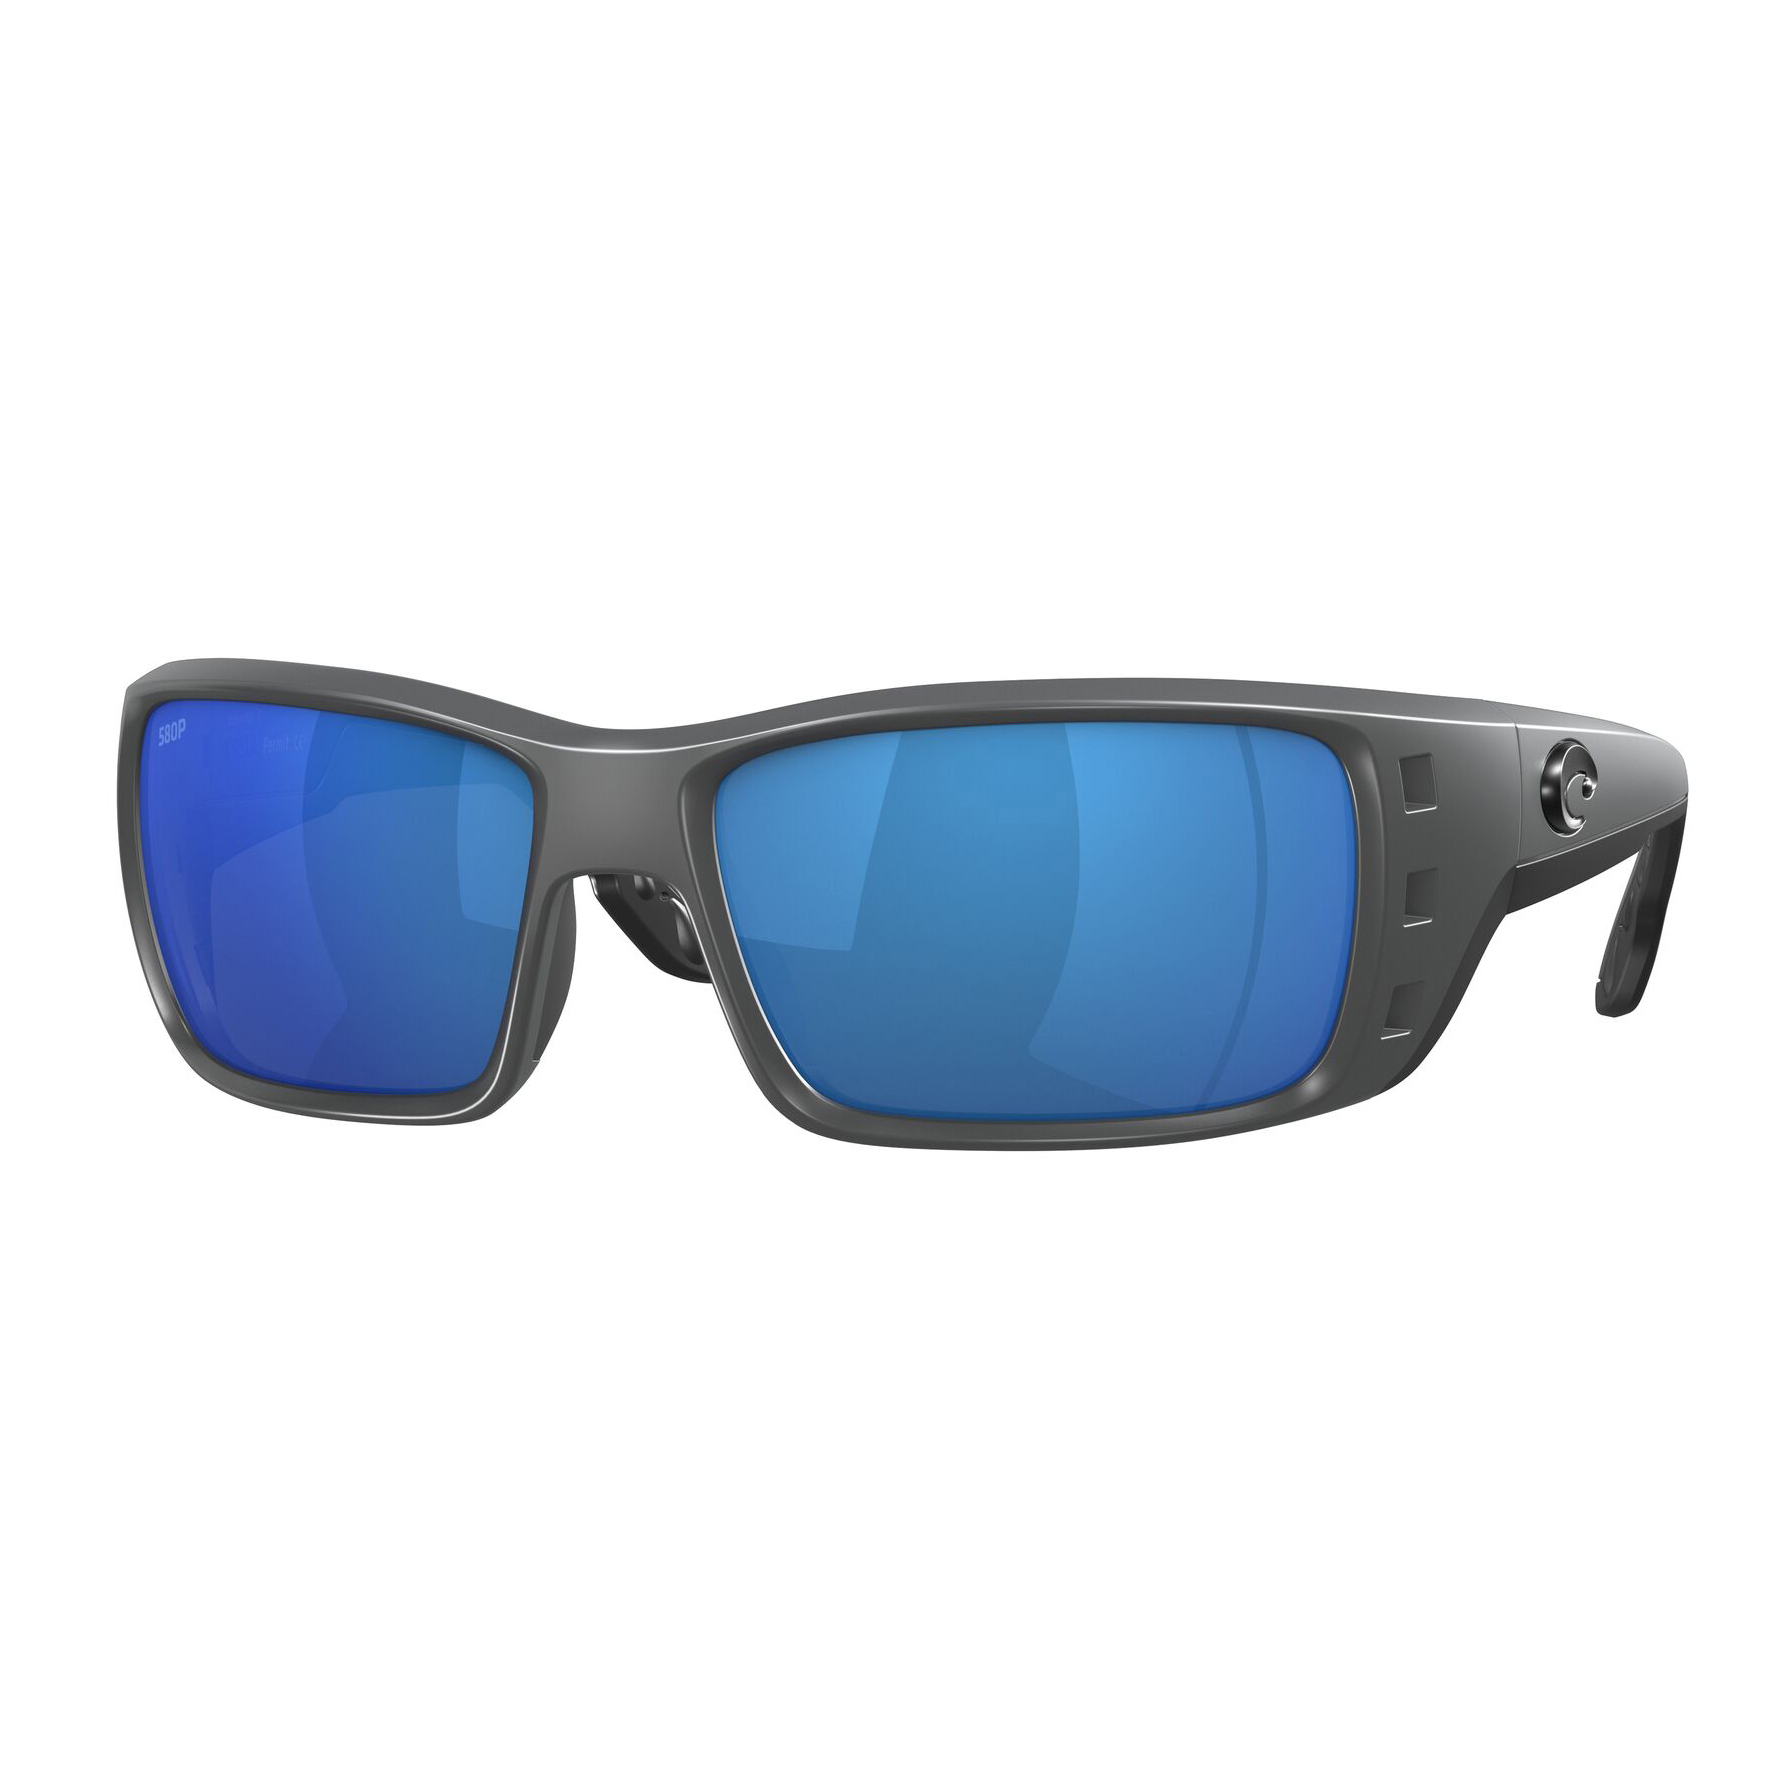 Costa Sunglasses, Permit, Blackout, Blue Mirror, 580G